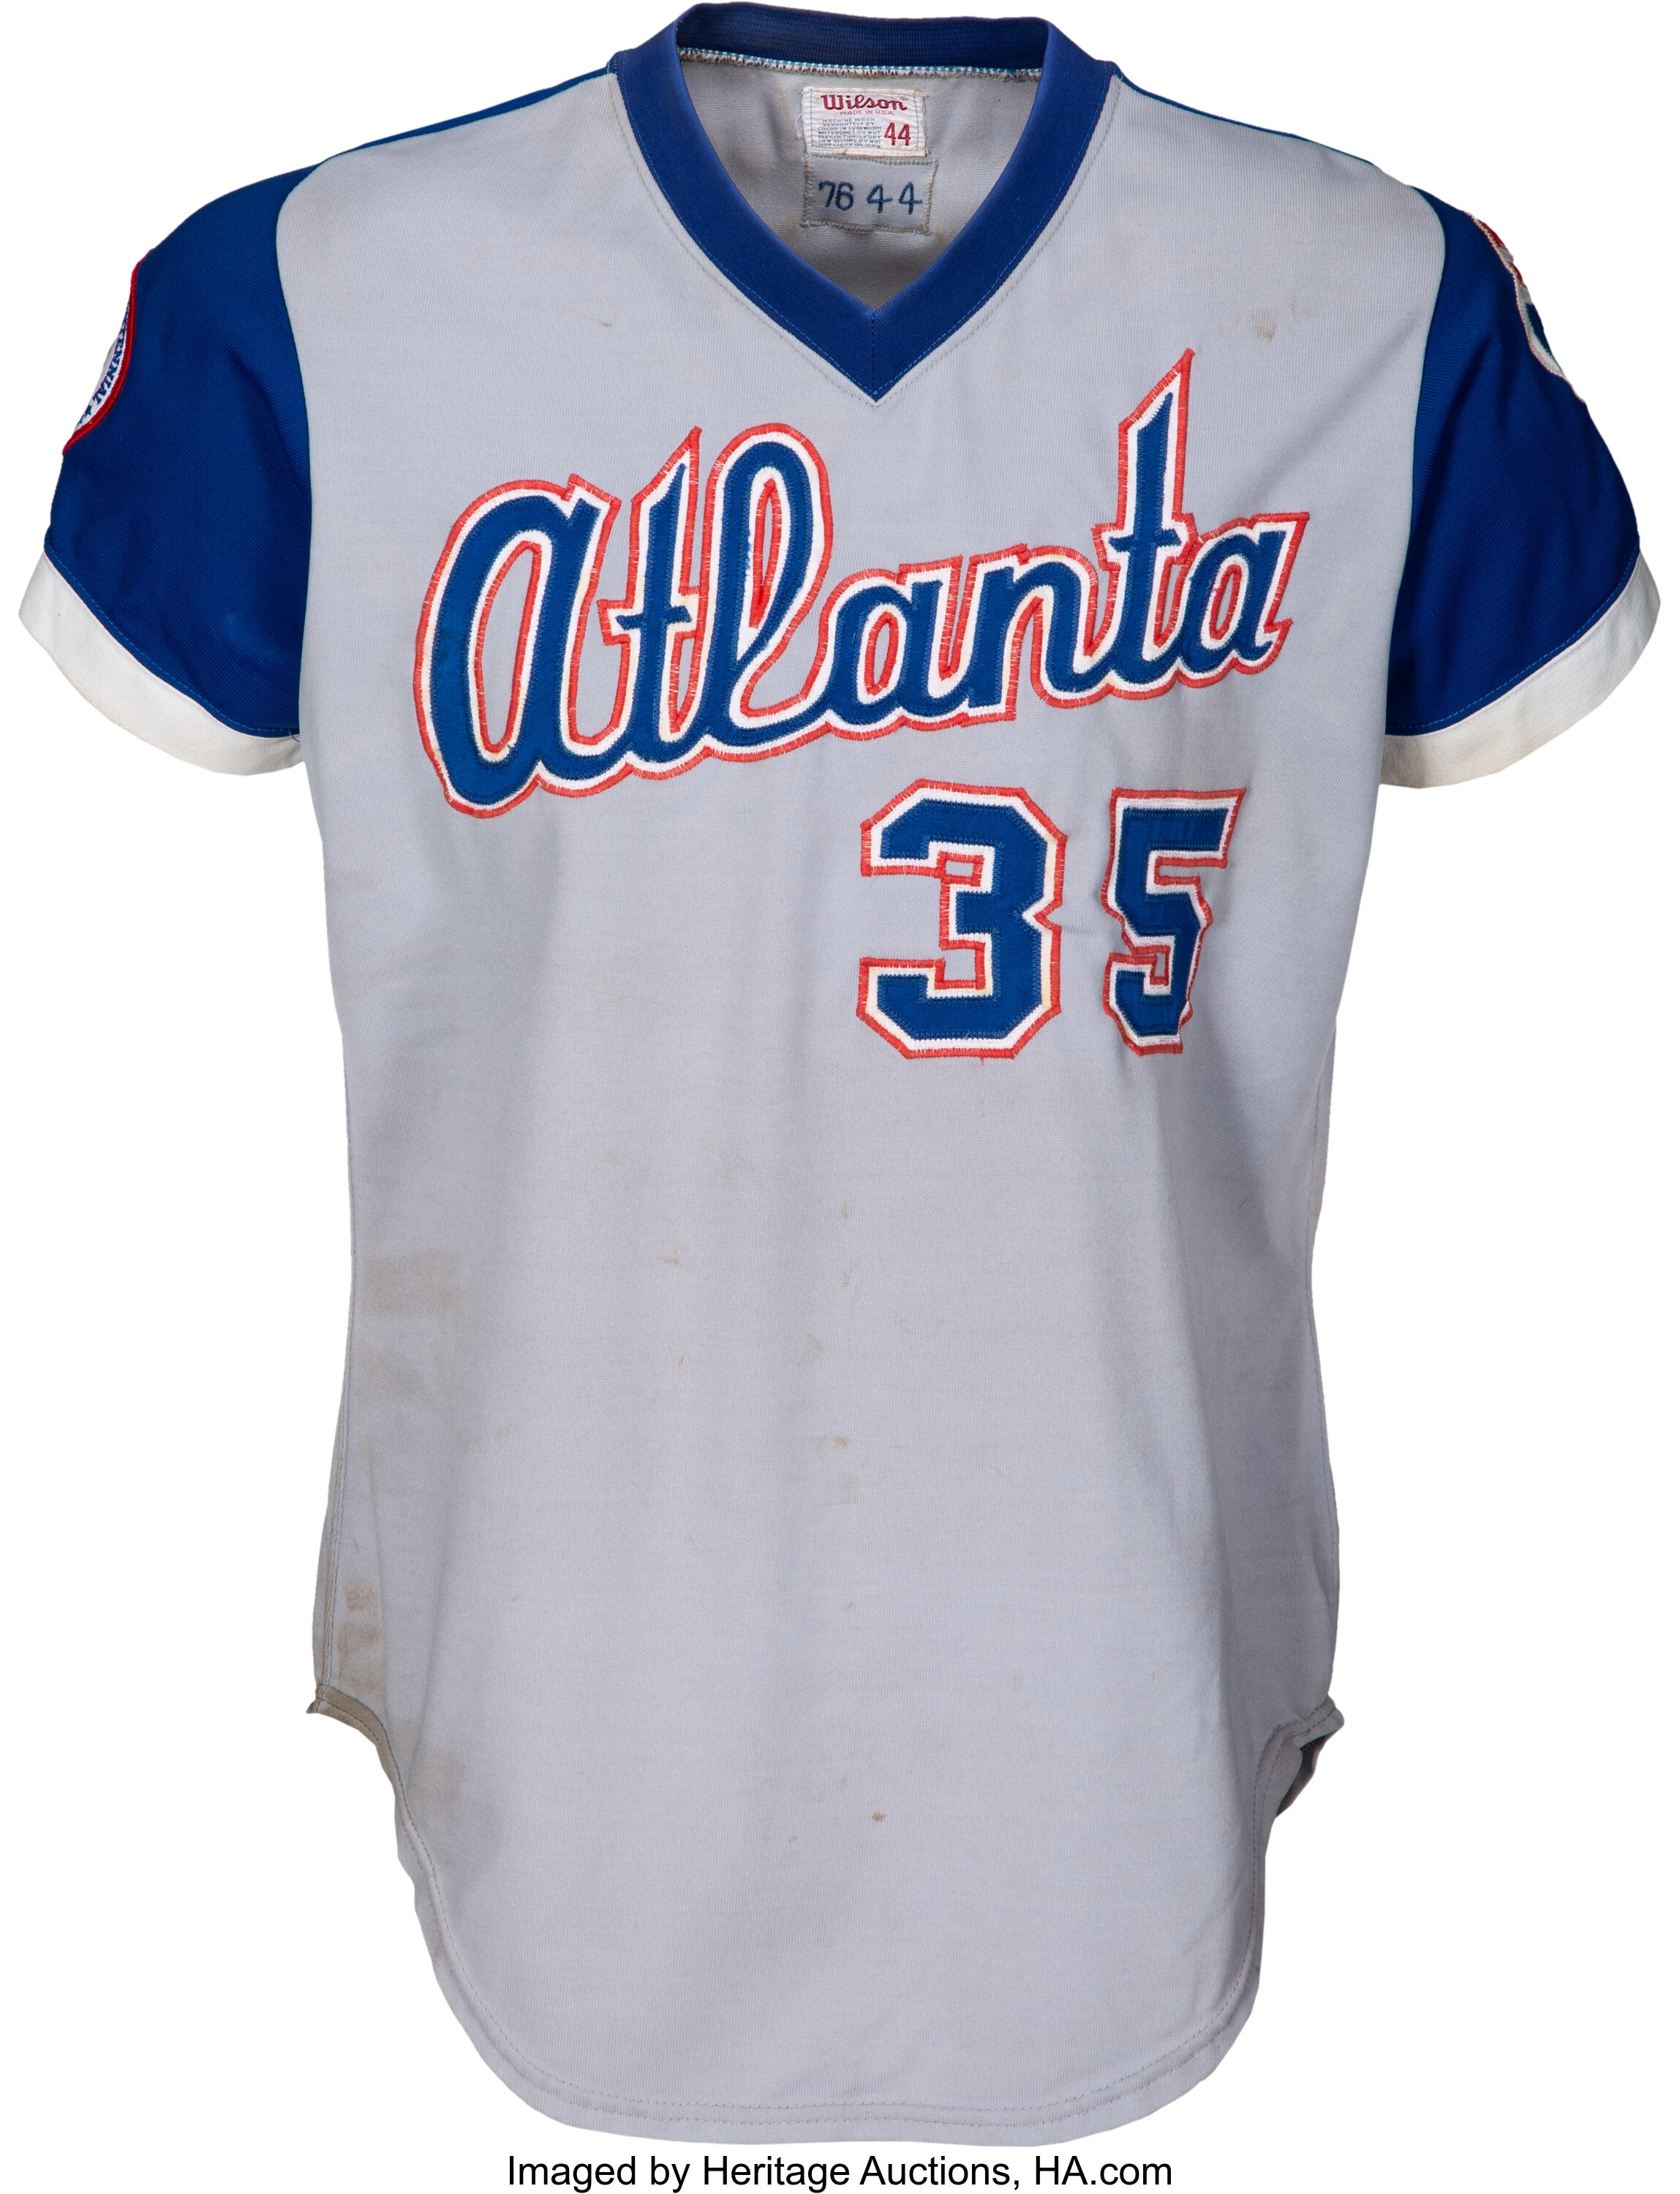 1980 Phil Niekro Game Worn & Signed Atlanta Braves Jersey. , Lot #56465